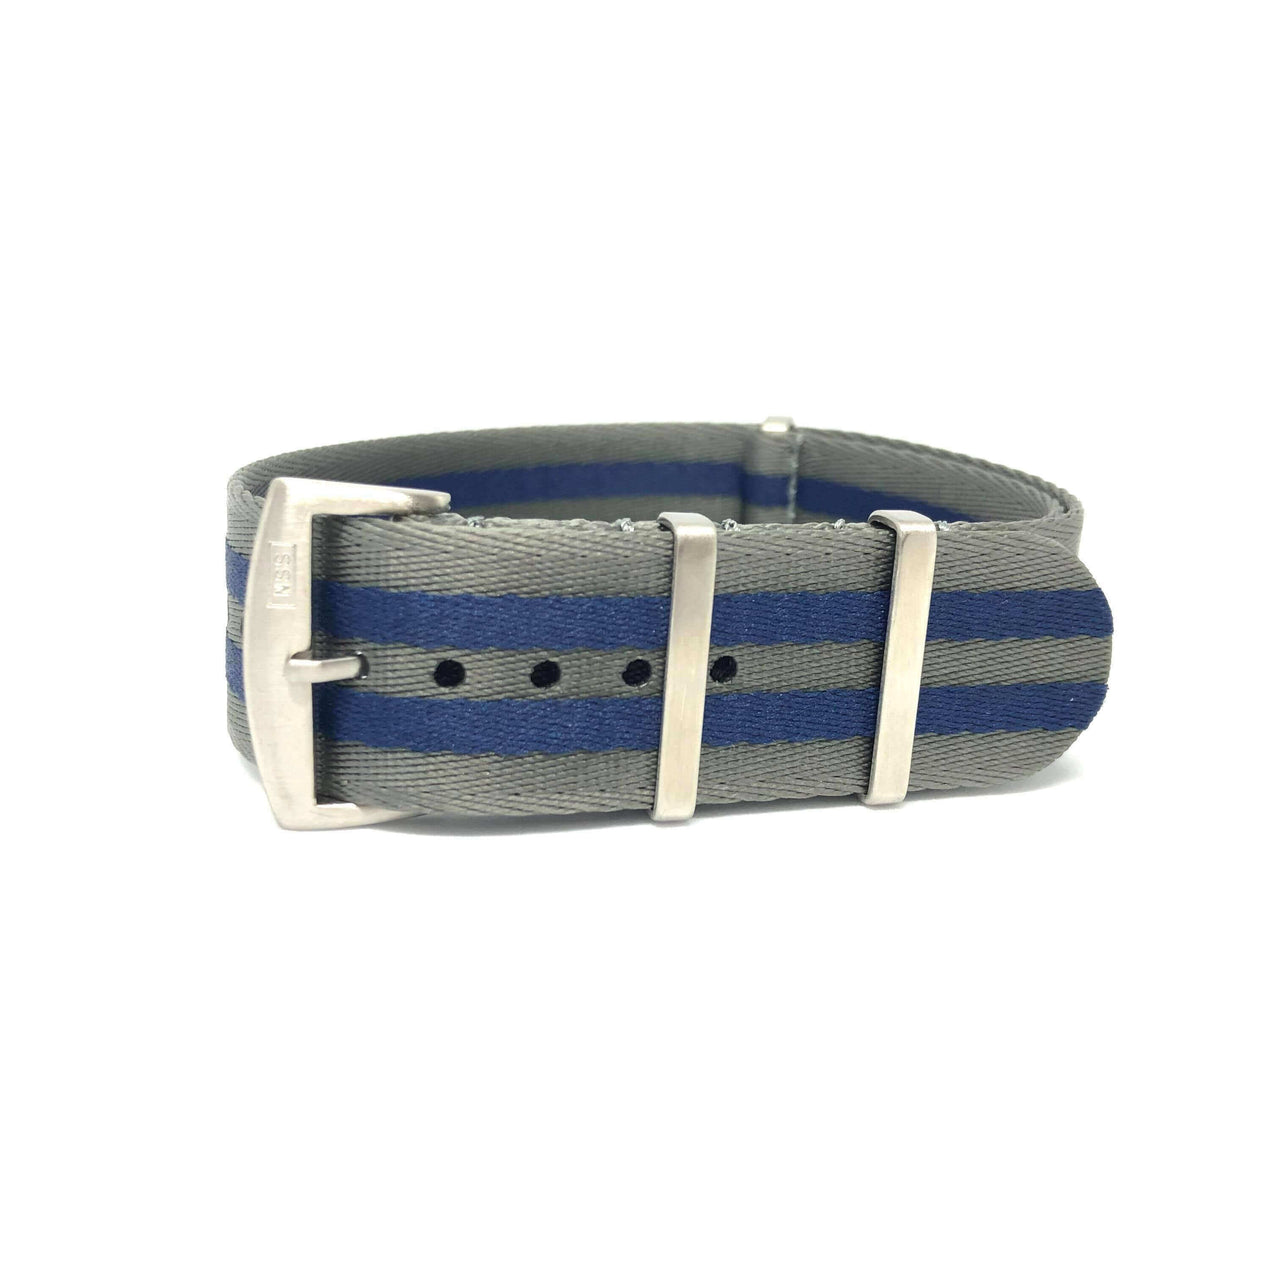 Premium Woven Military Style Watch Strap - Grey & Blue Stripes